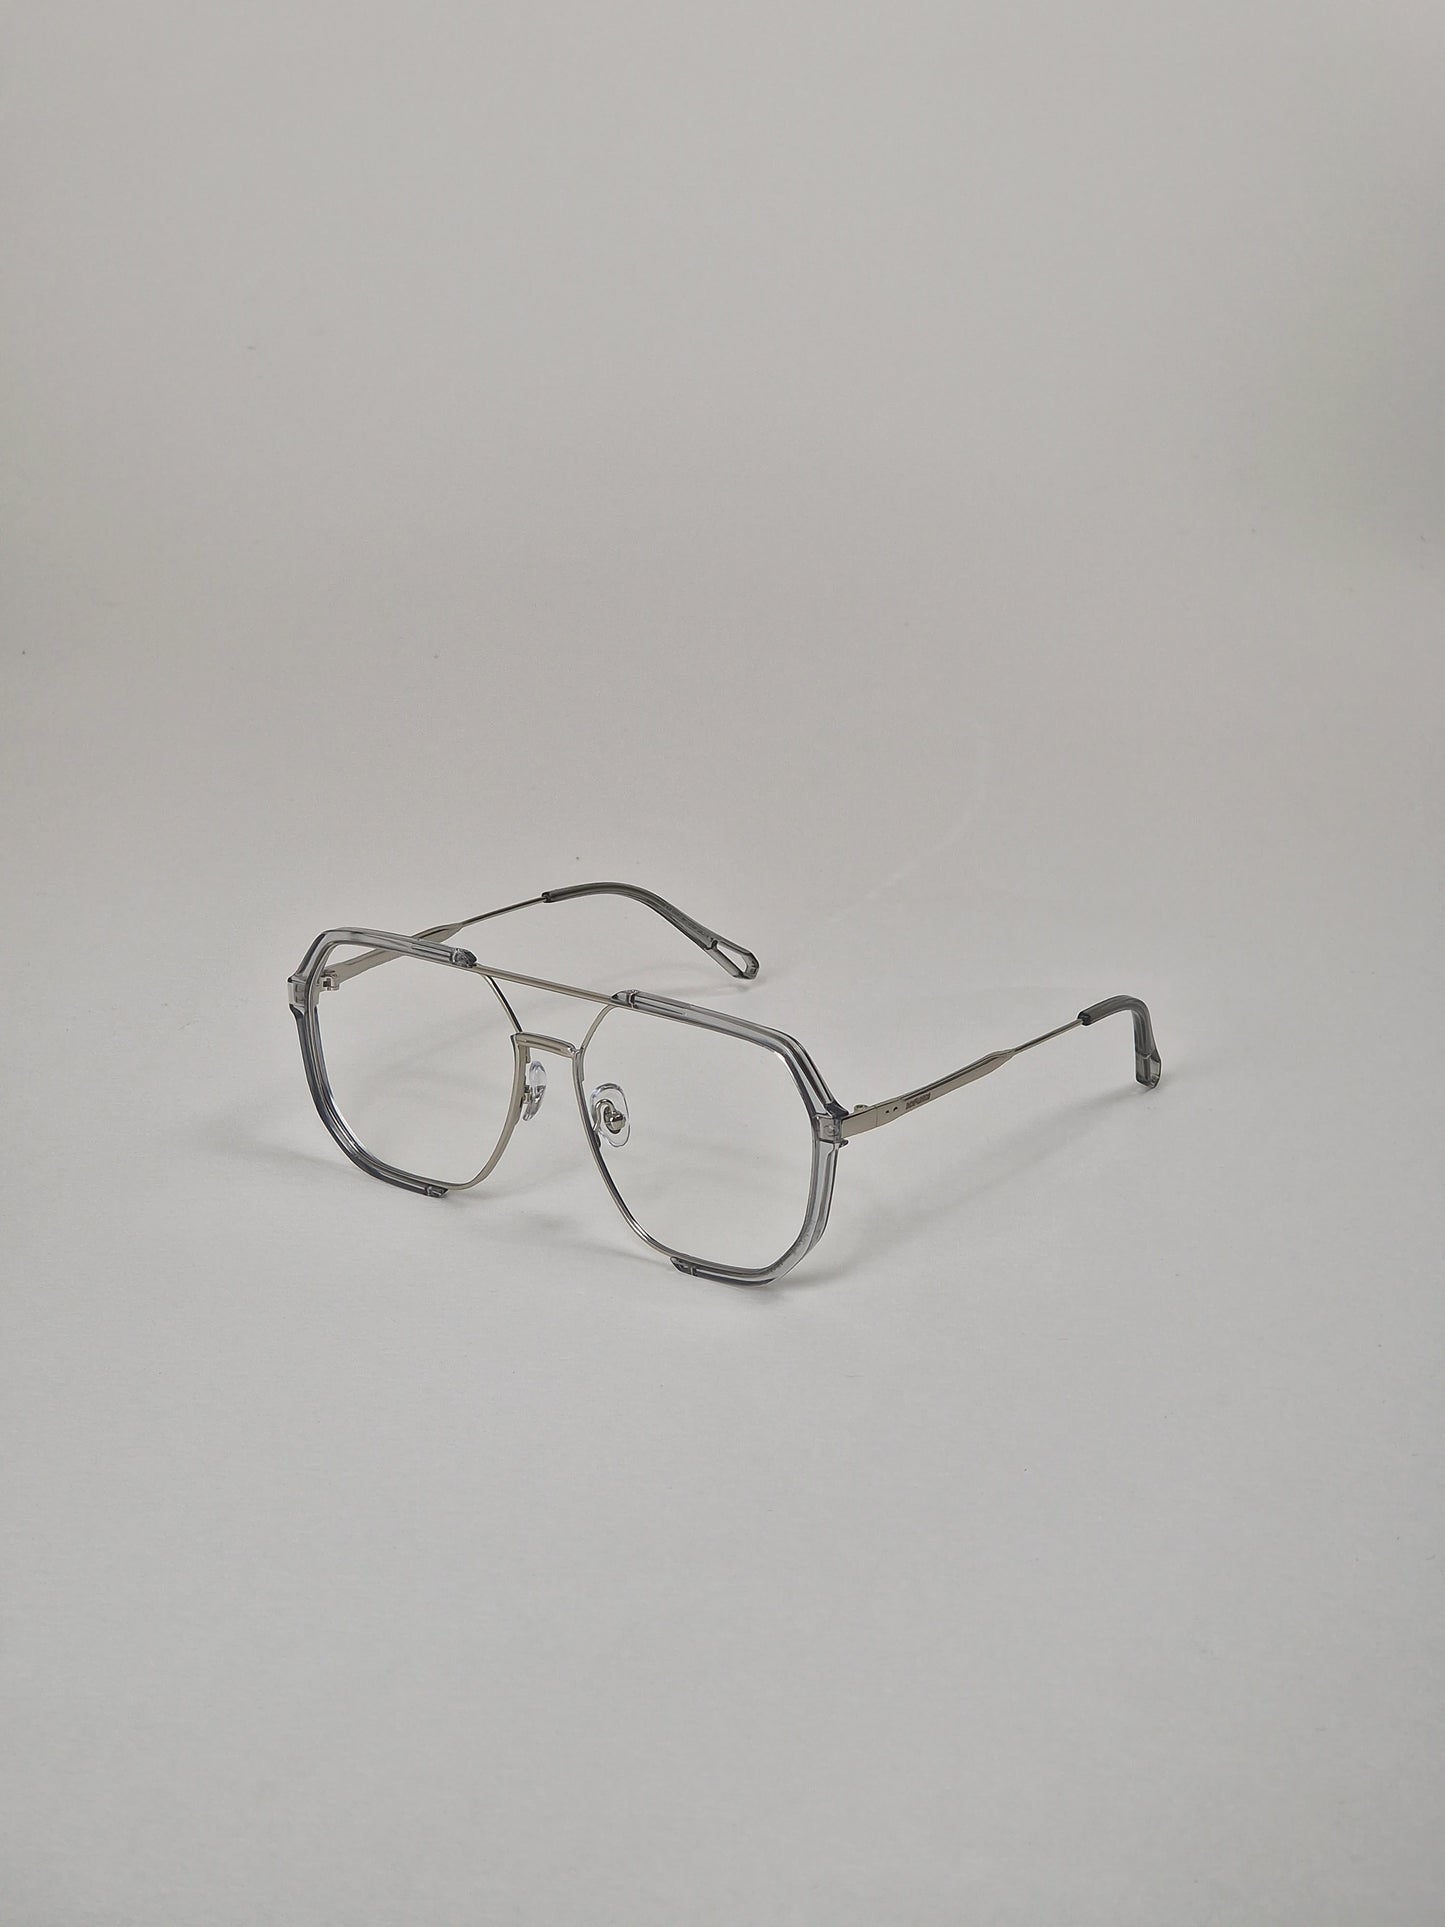 Sunglasses, model 42 - Window glass